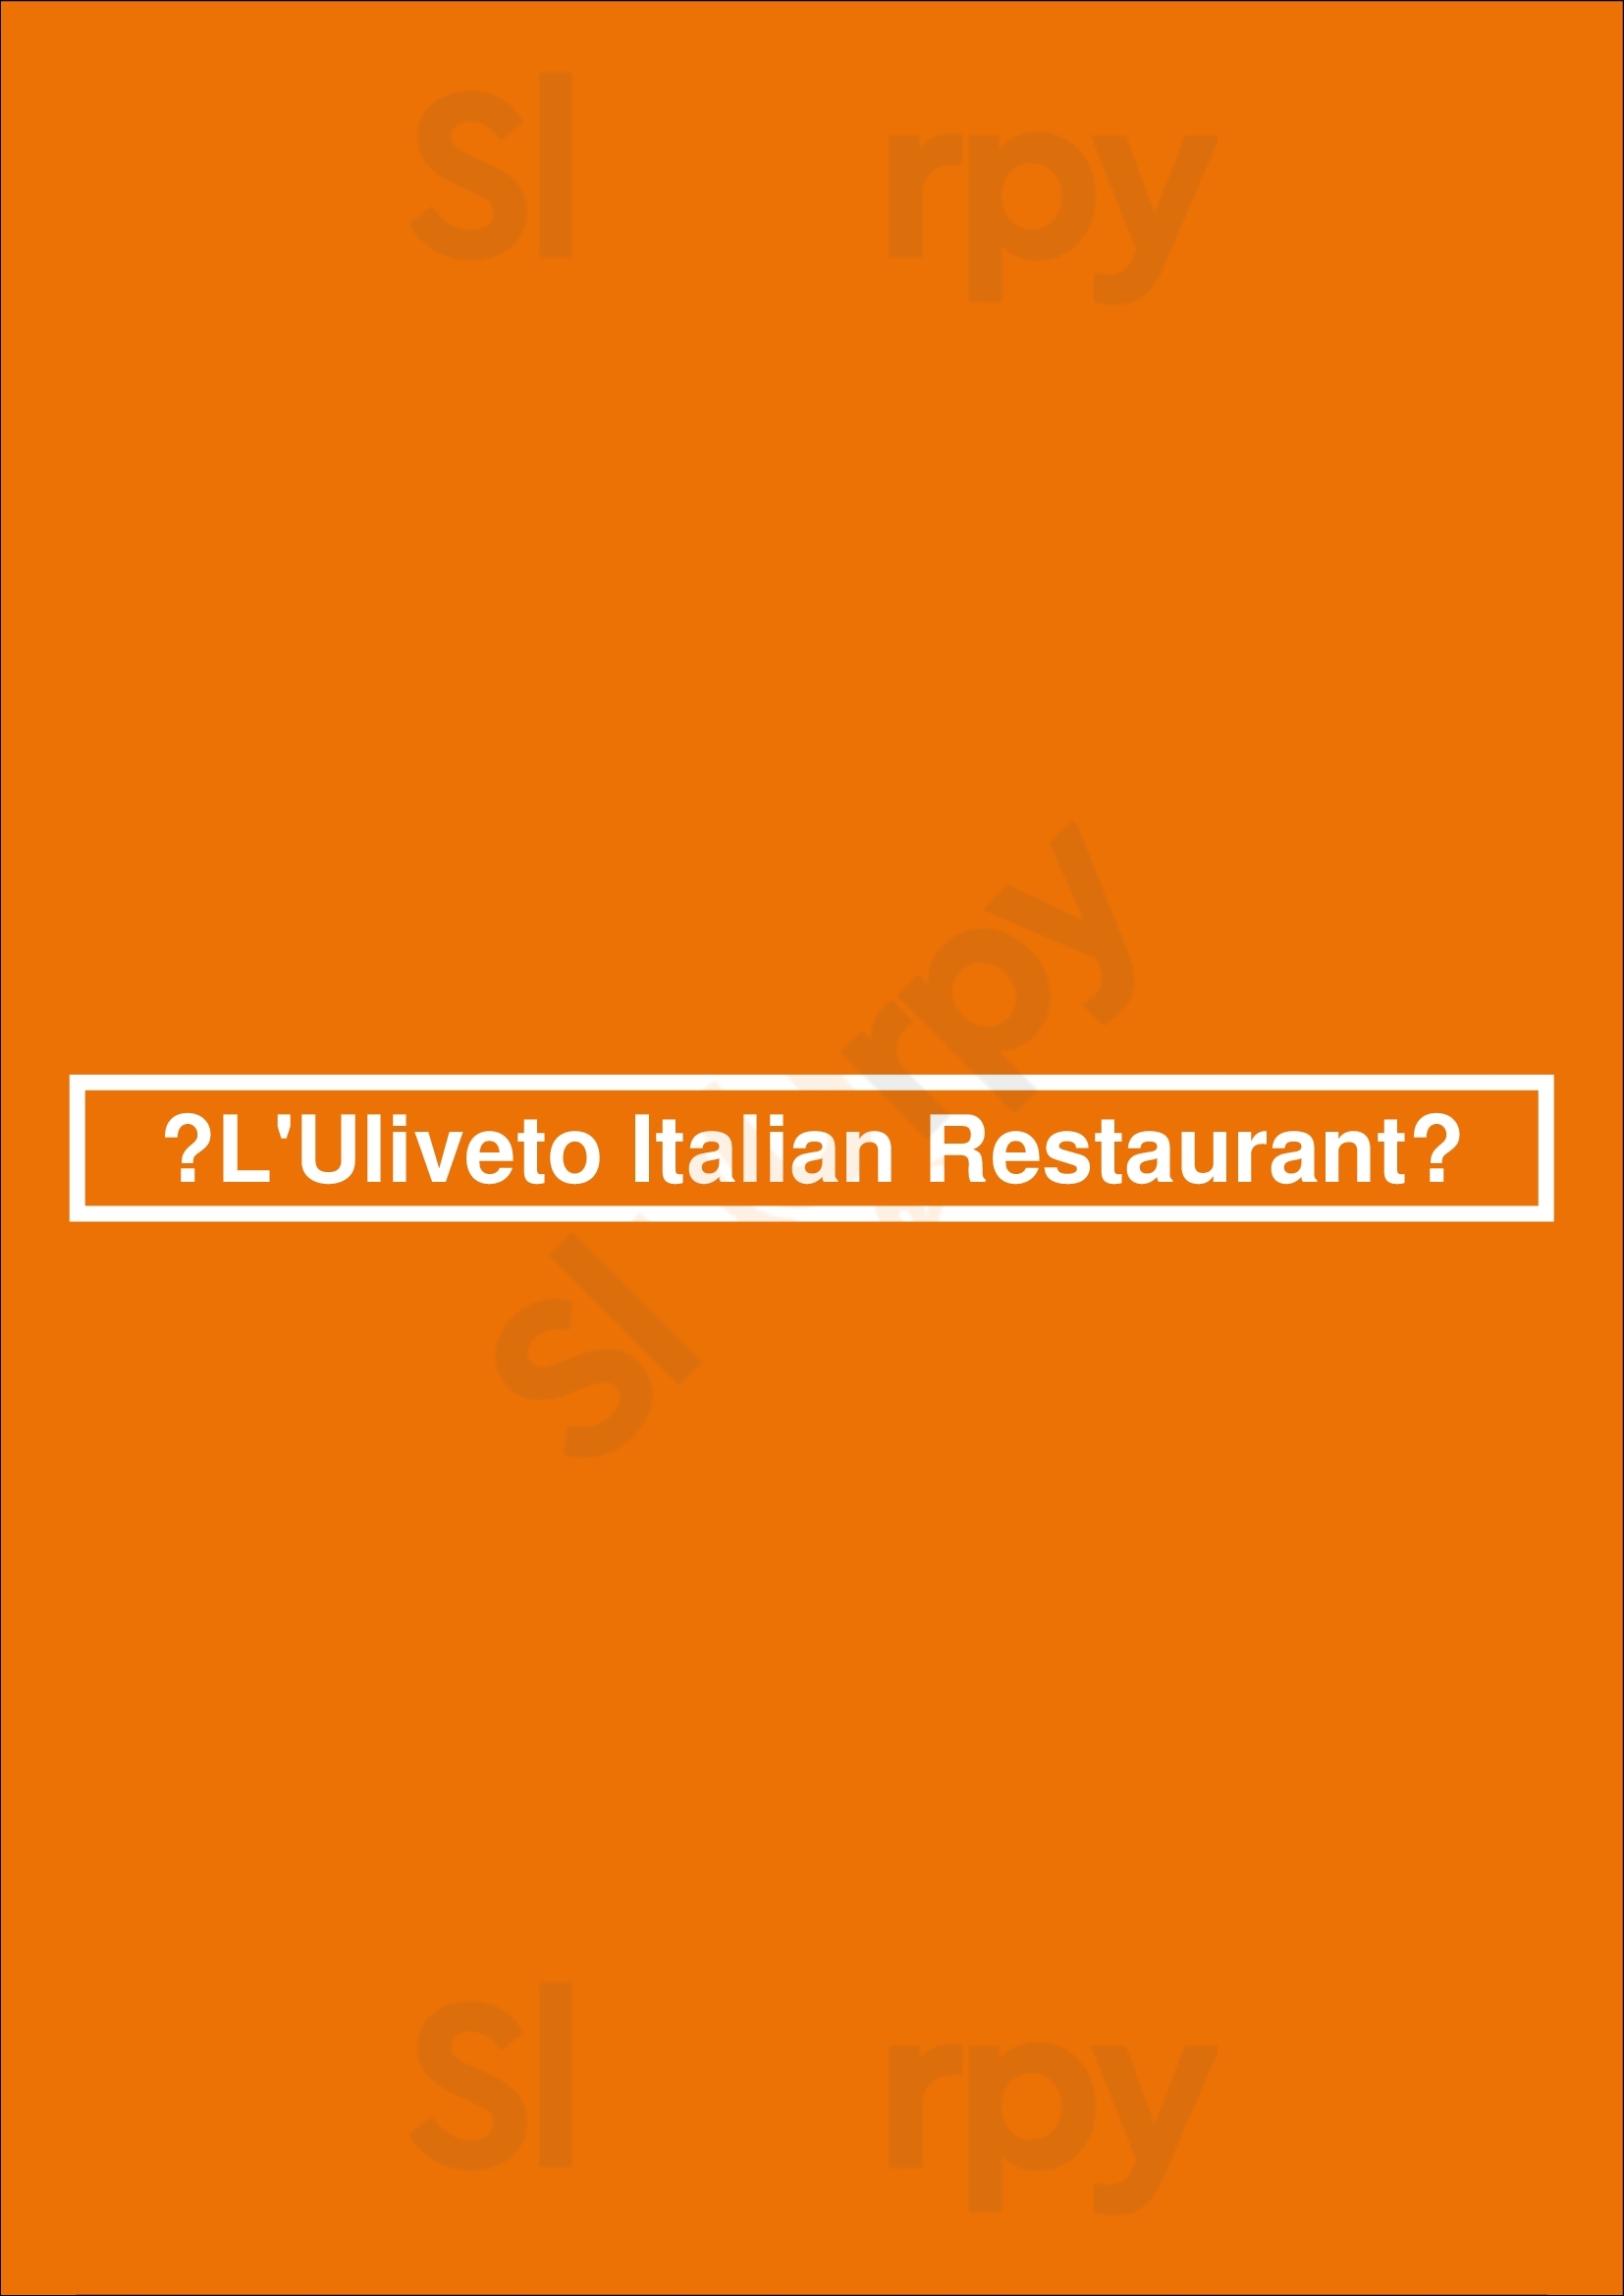 ‪l'uliveto Italian Restaurant‬ القاهرة Menu - 1